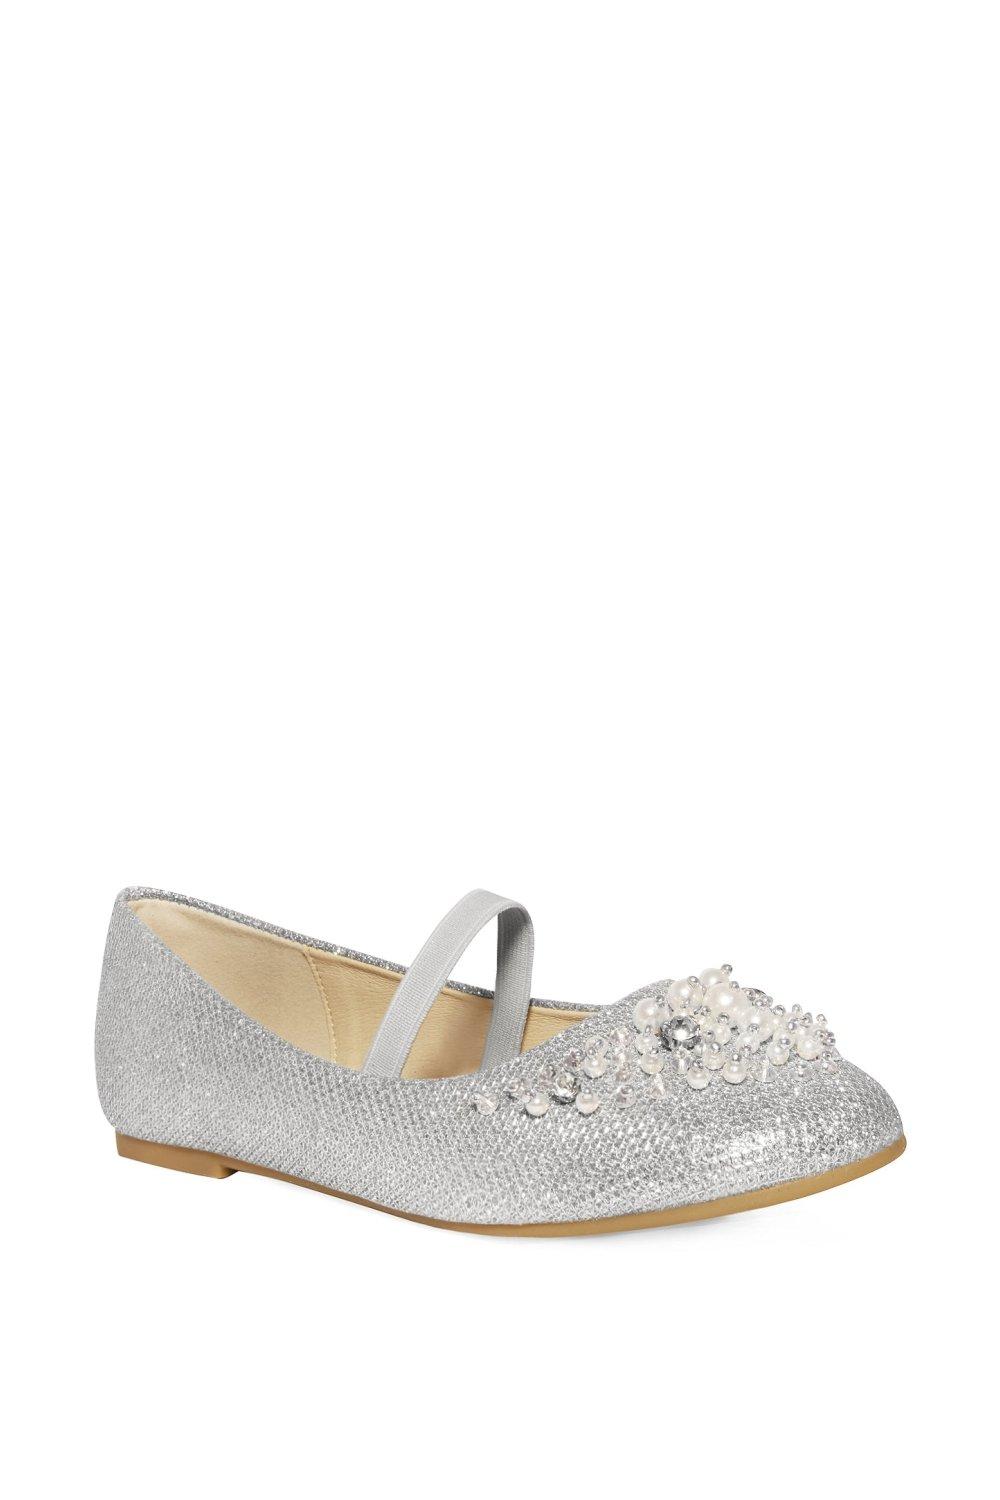 ’Dahlia’ Kids Pearl & Diamante Embellished Flatform Shoes